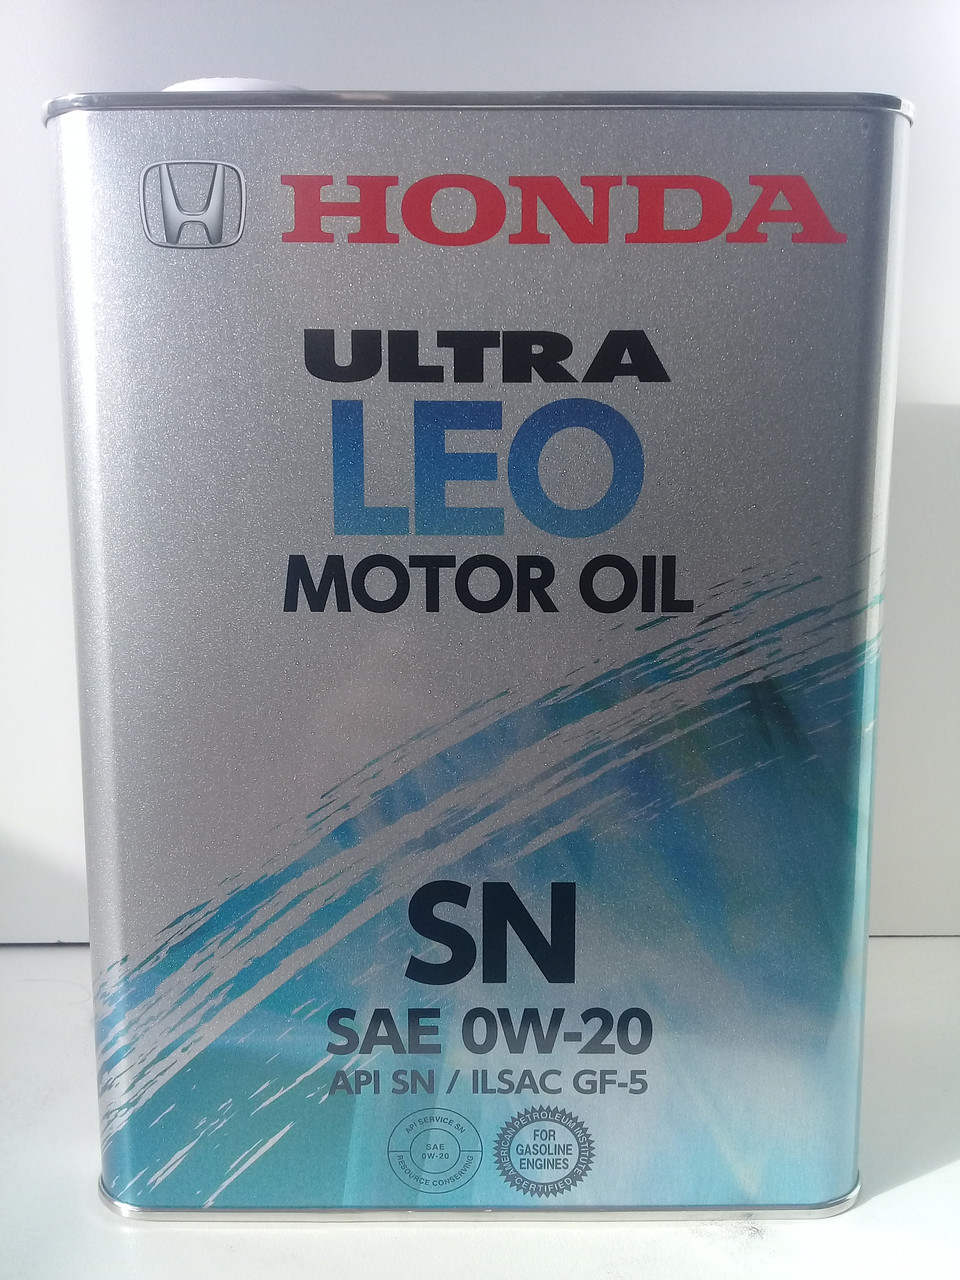 Ultra LEO-SN Honda 08217-99974